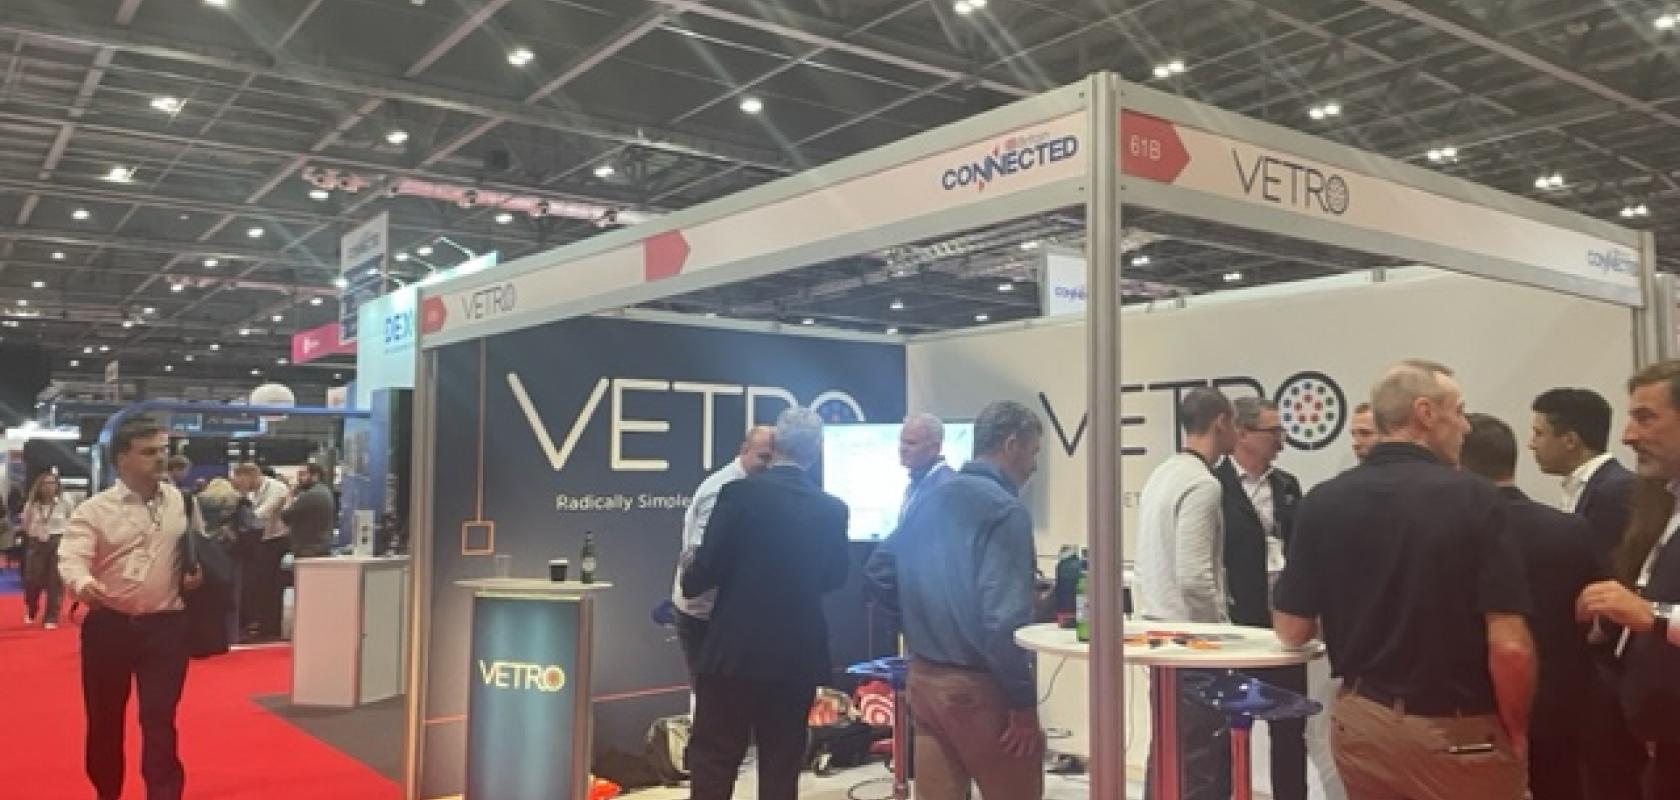 Vetro at Connected Britain